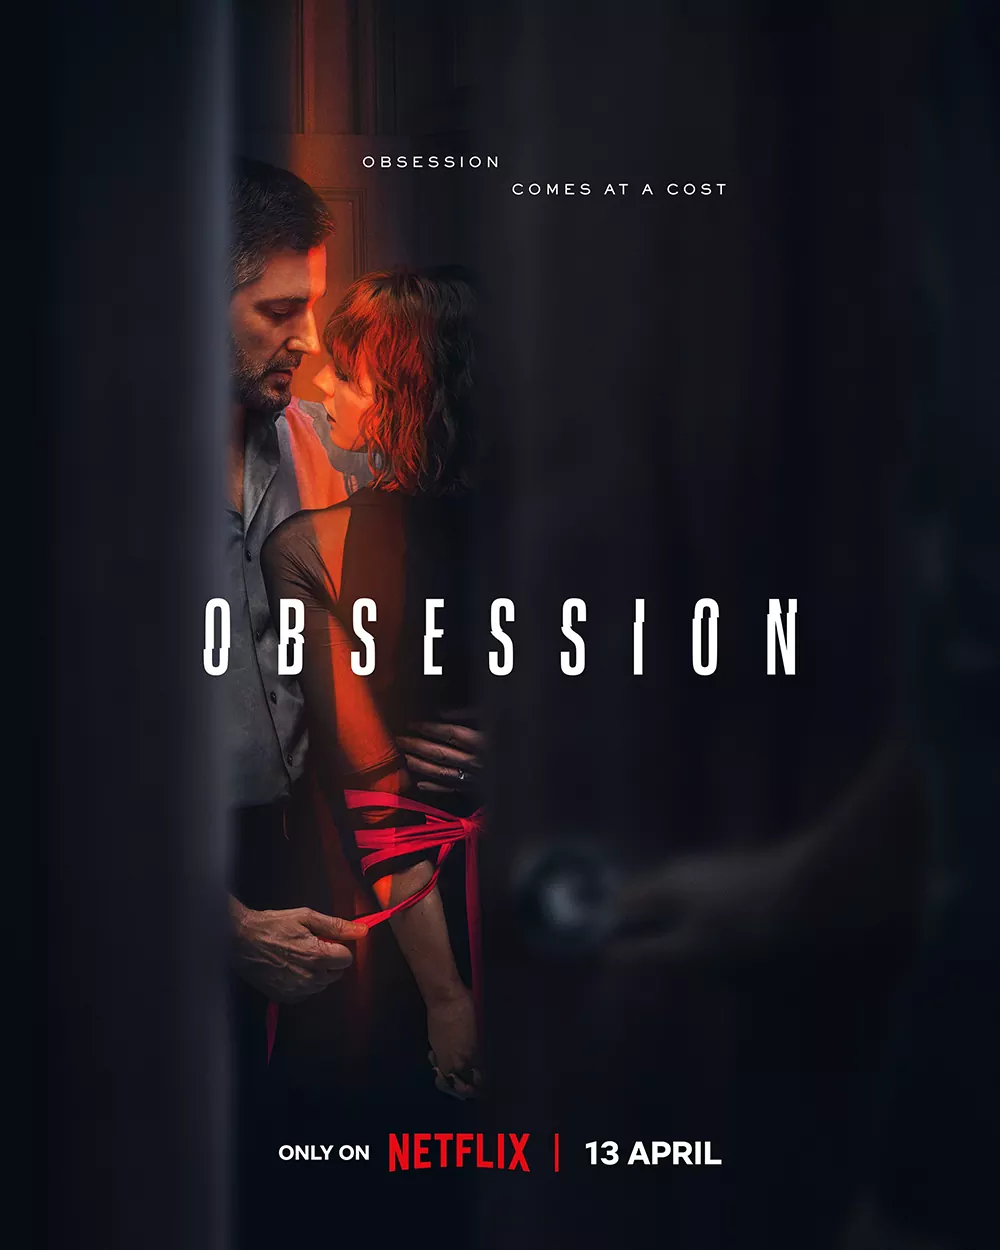 Trailer Από Τη Μίνι Σειρά "Obsession"